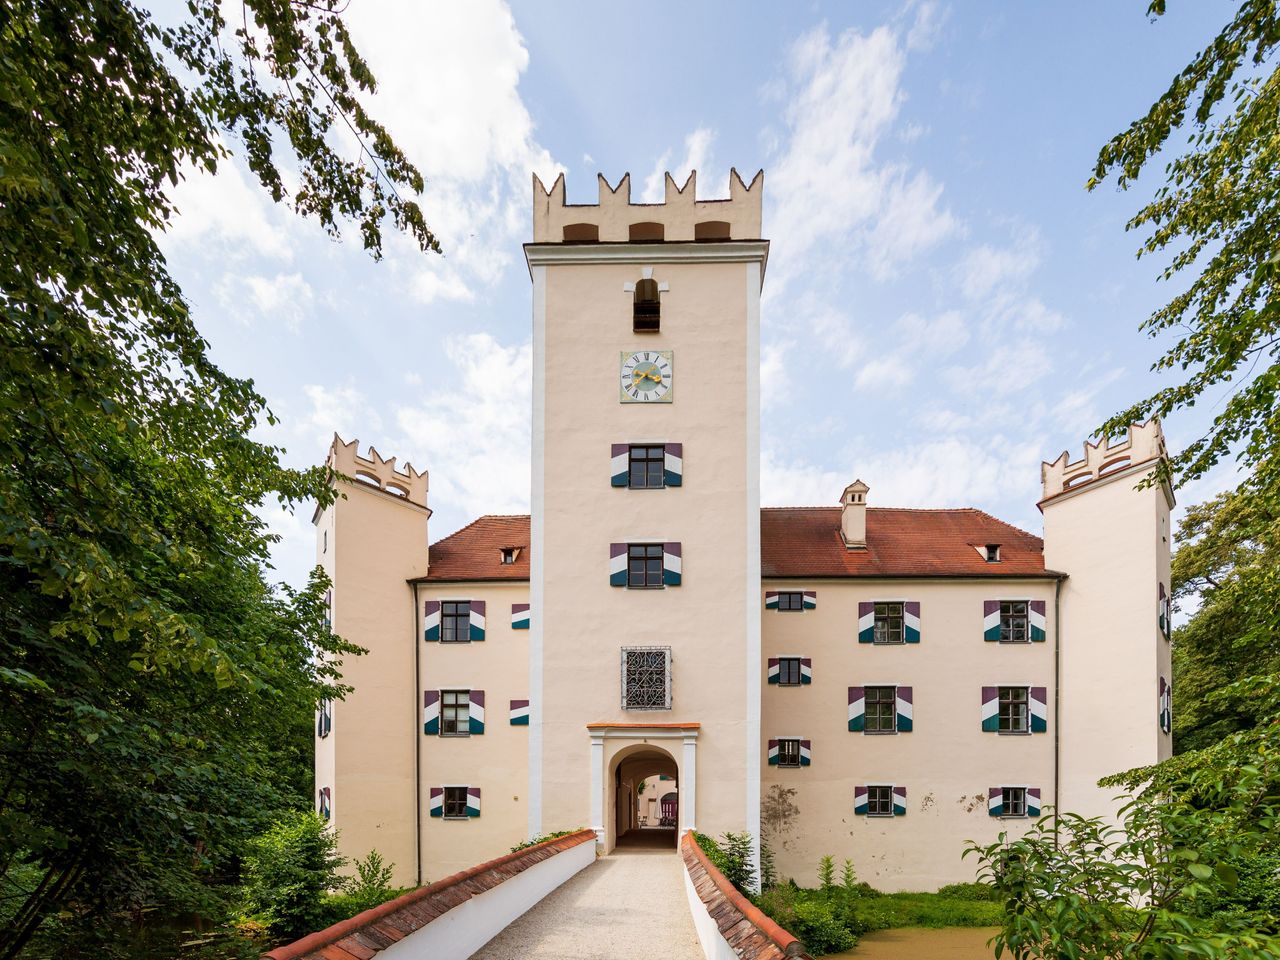 8 Tage - Märchenhafter Sommer am Schloss Mariakirchen